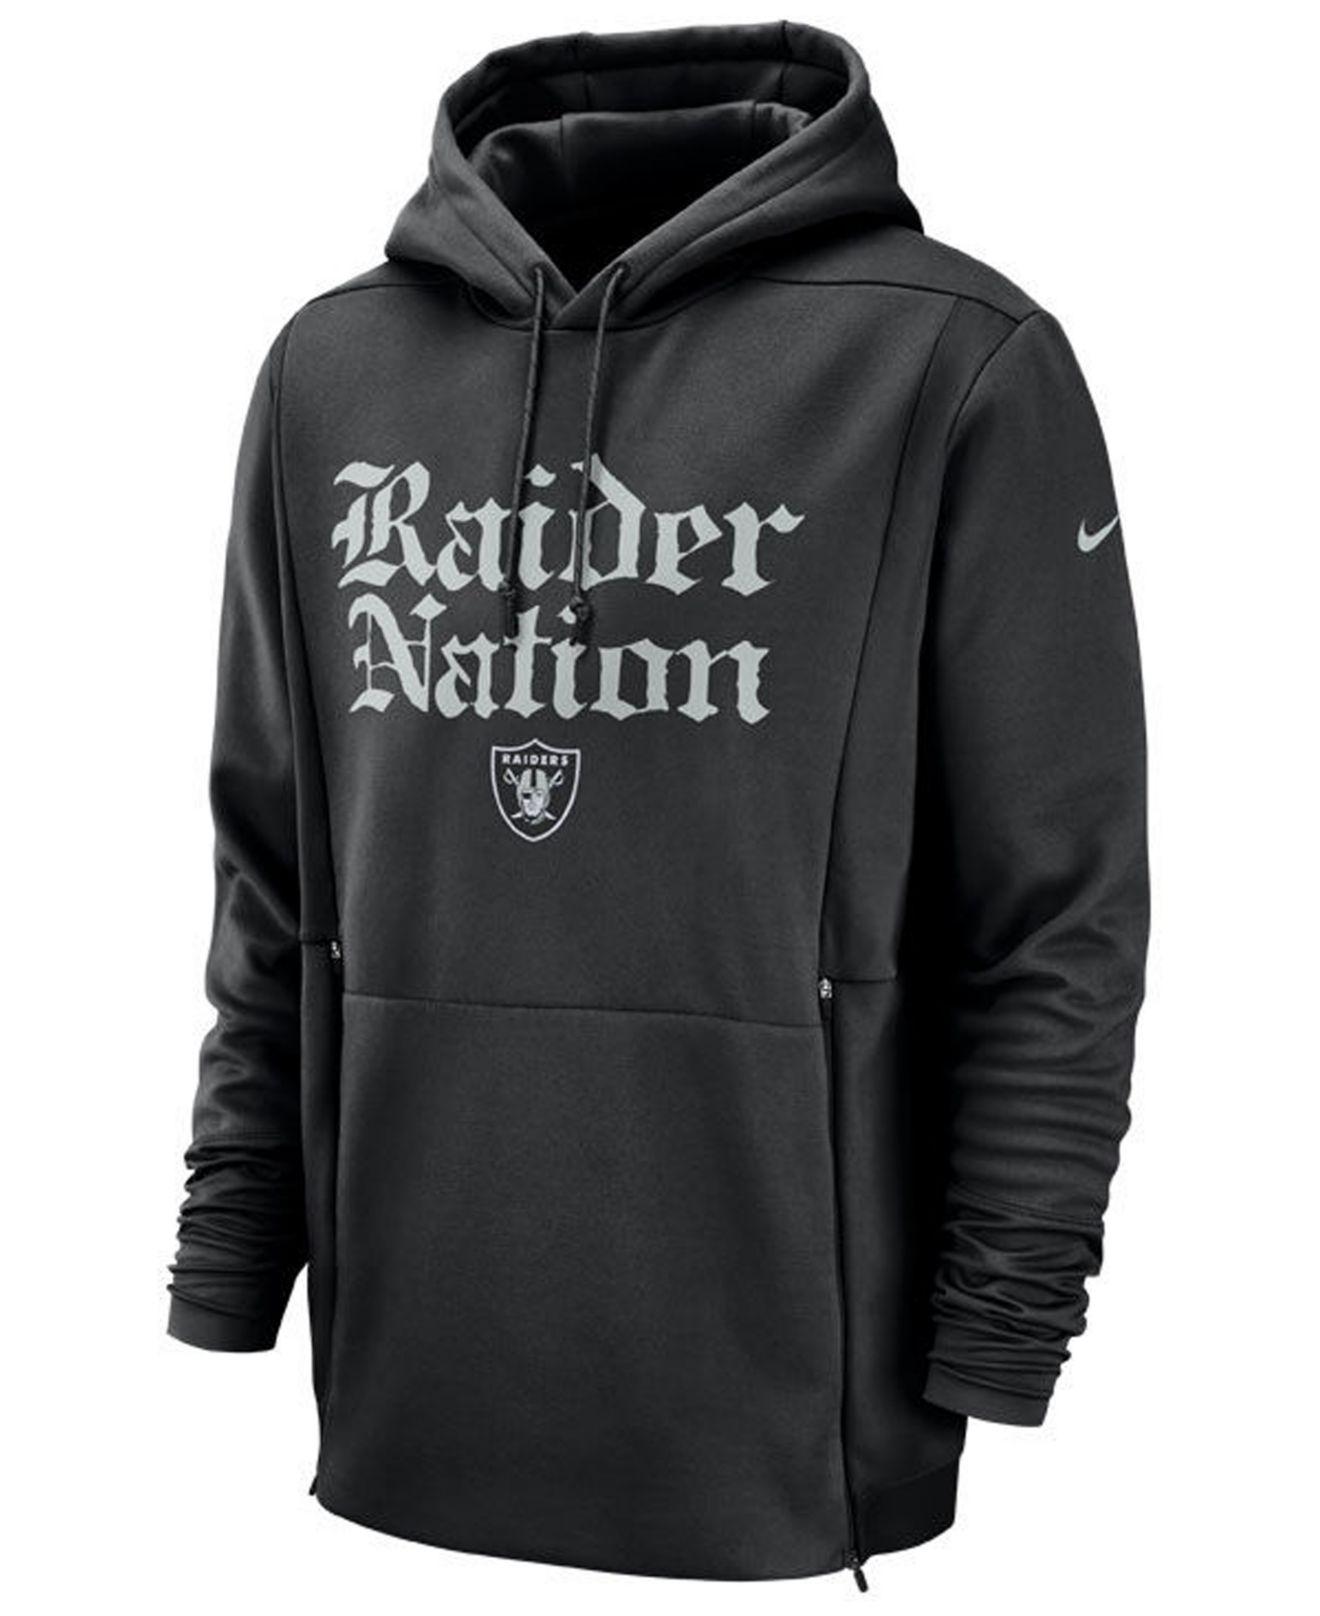 raider nation hoodie